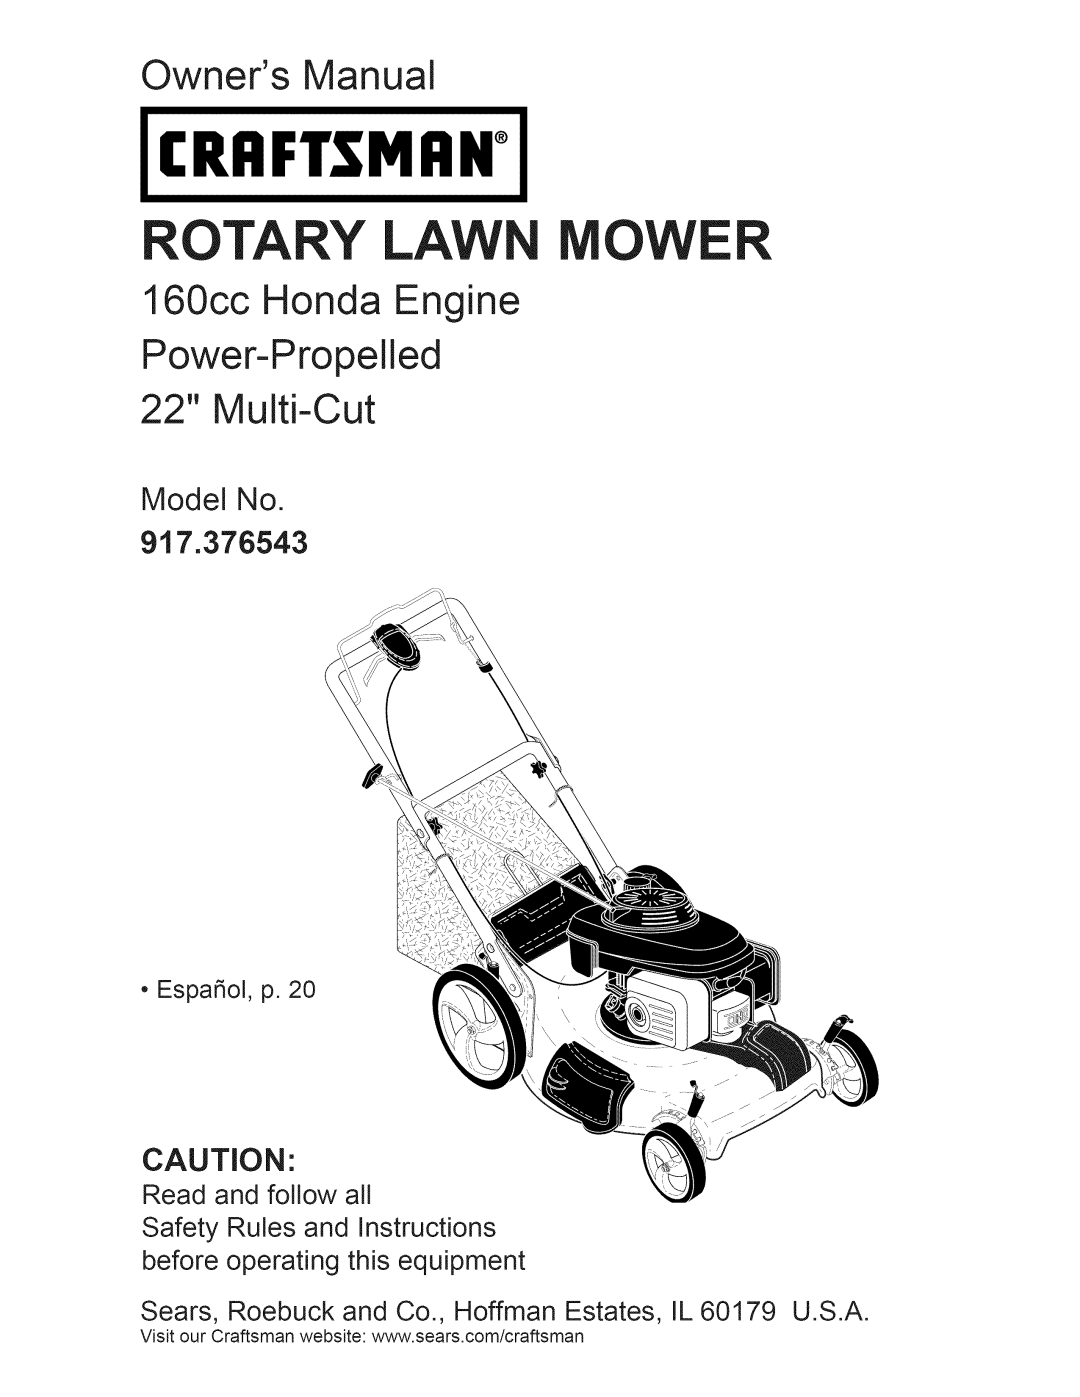 Craftsman manual Model No 917.376543, Craftsman, Rotary Lawn Mower, Owners Manual 